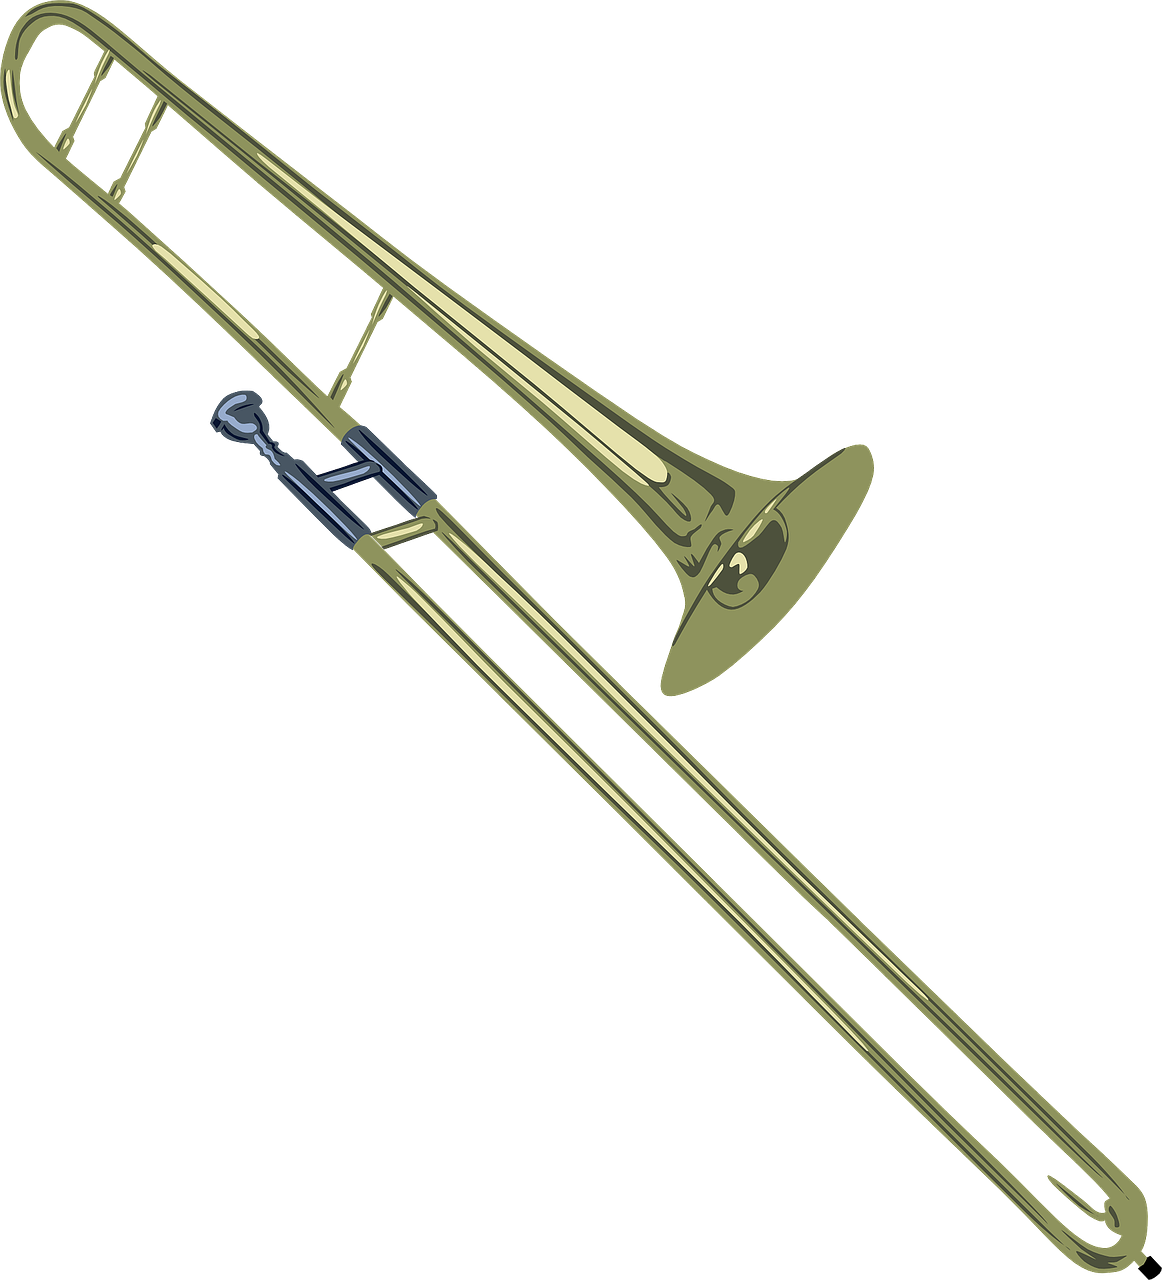 trombone-g37e6805f9_1280